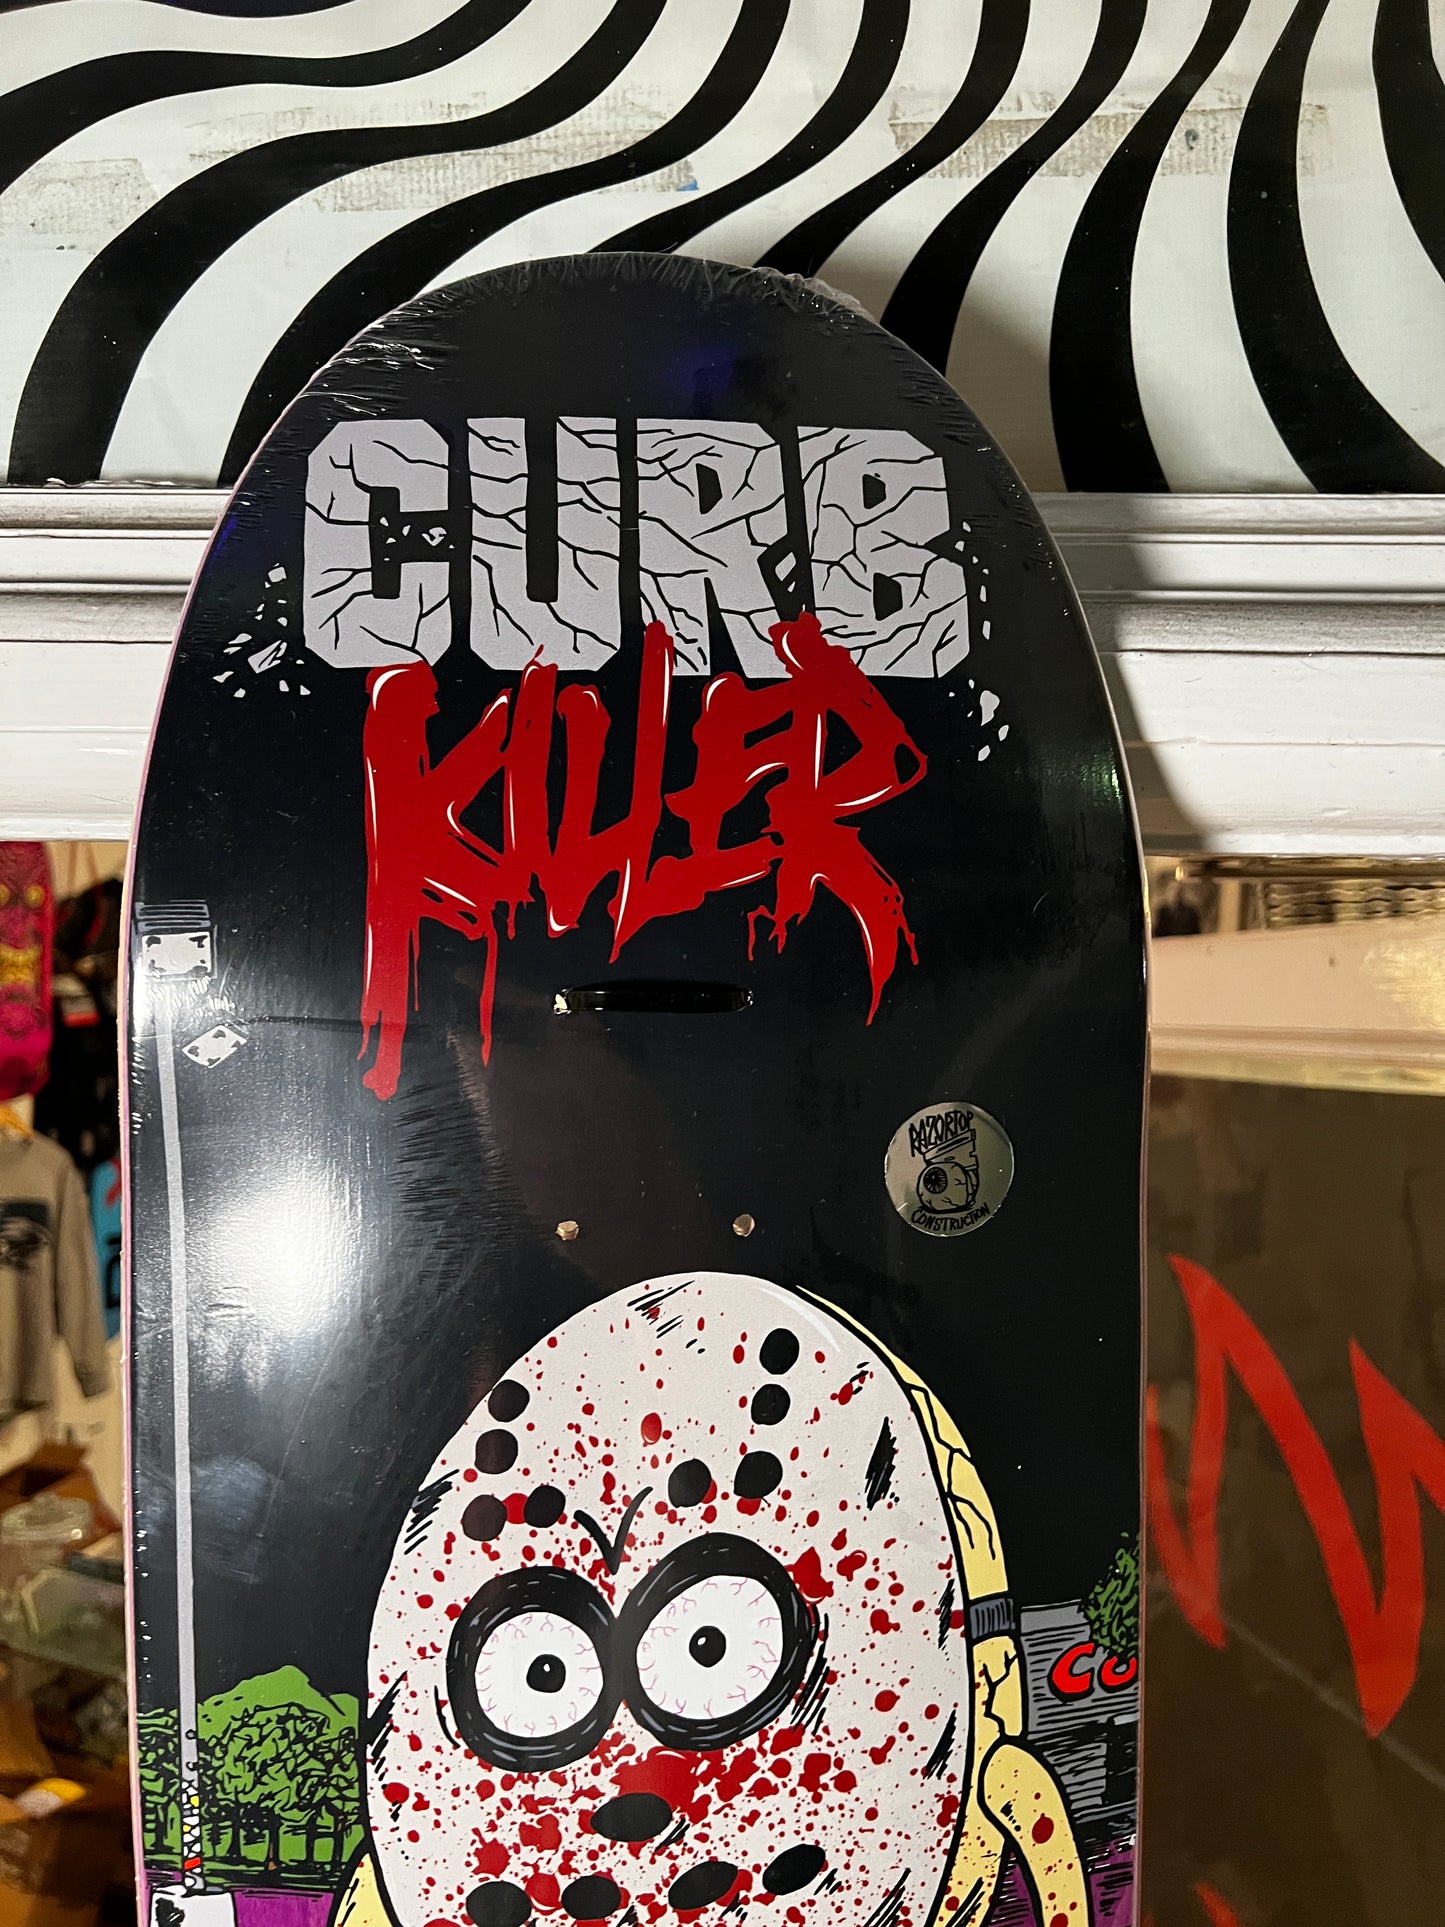 Heroin Skateboards Curb Killer Guest Model 10"